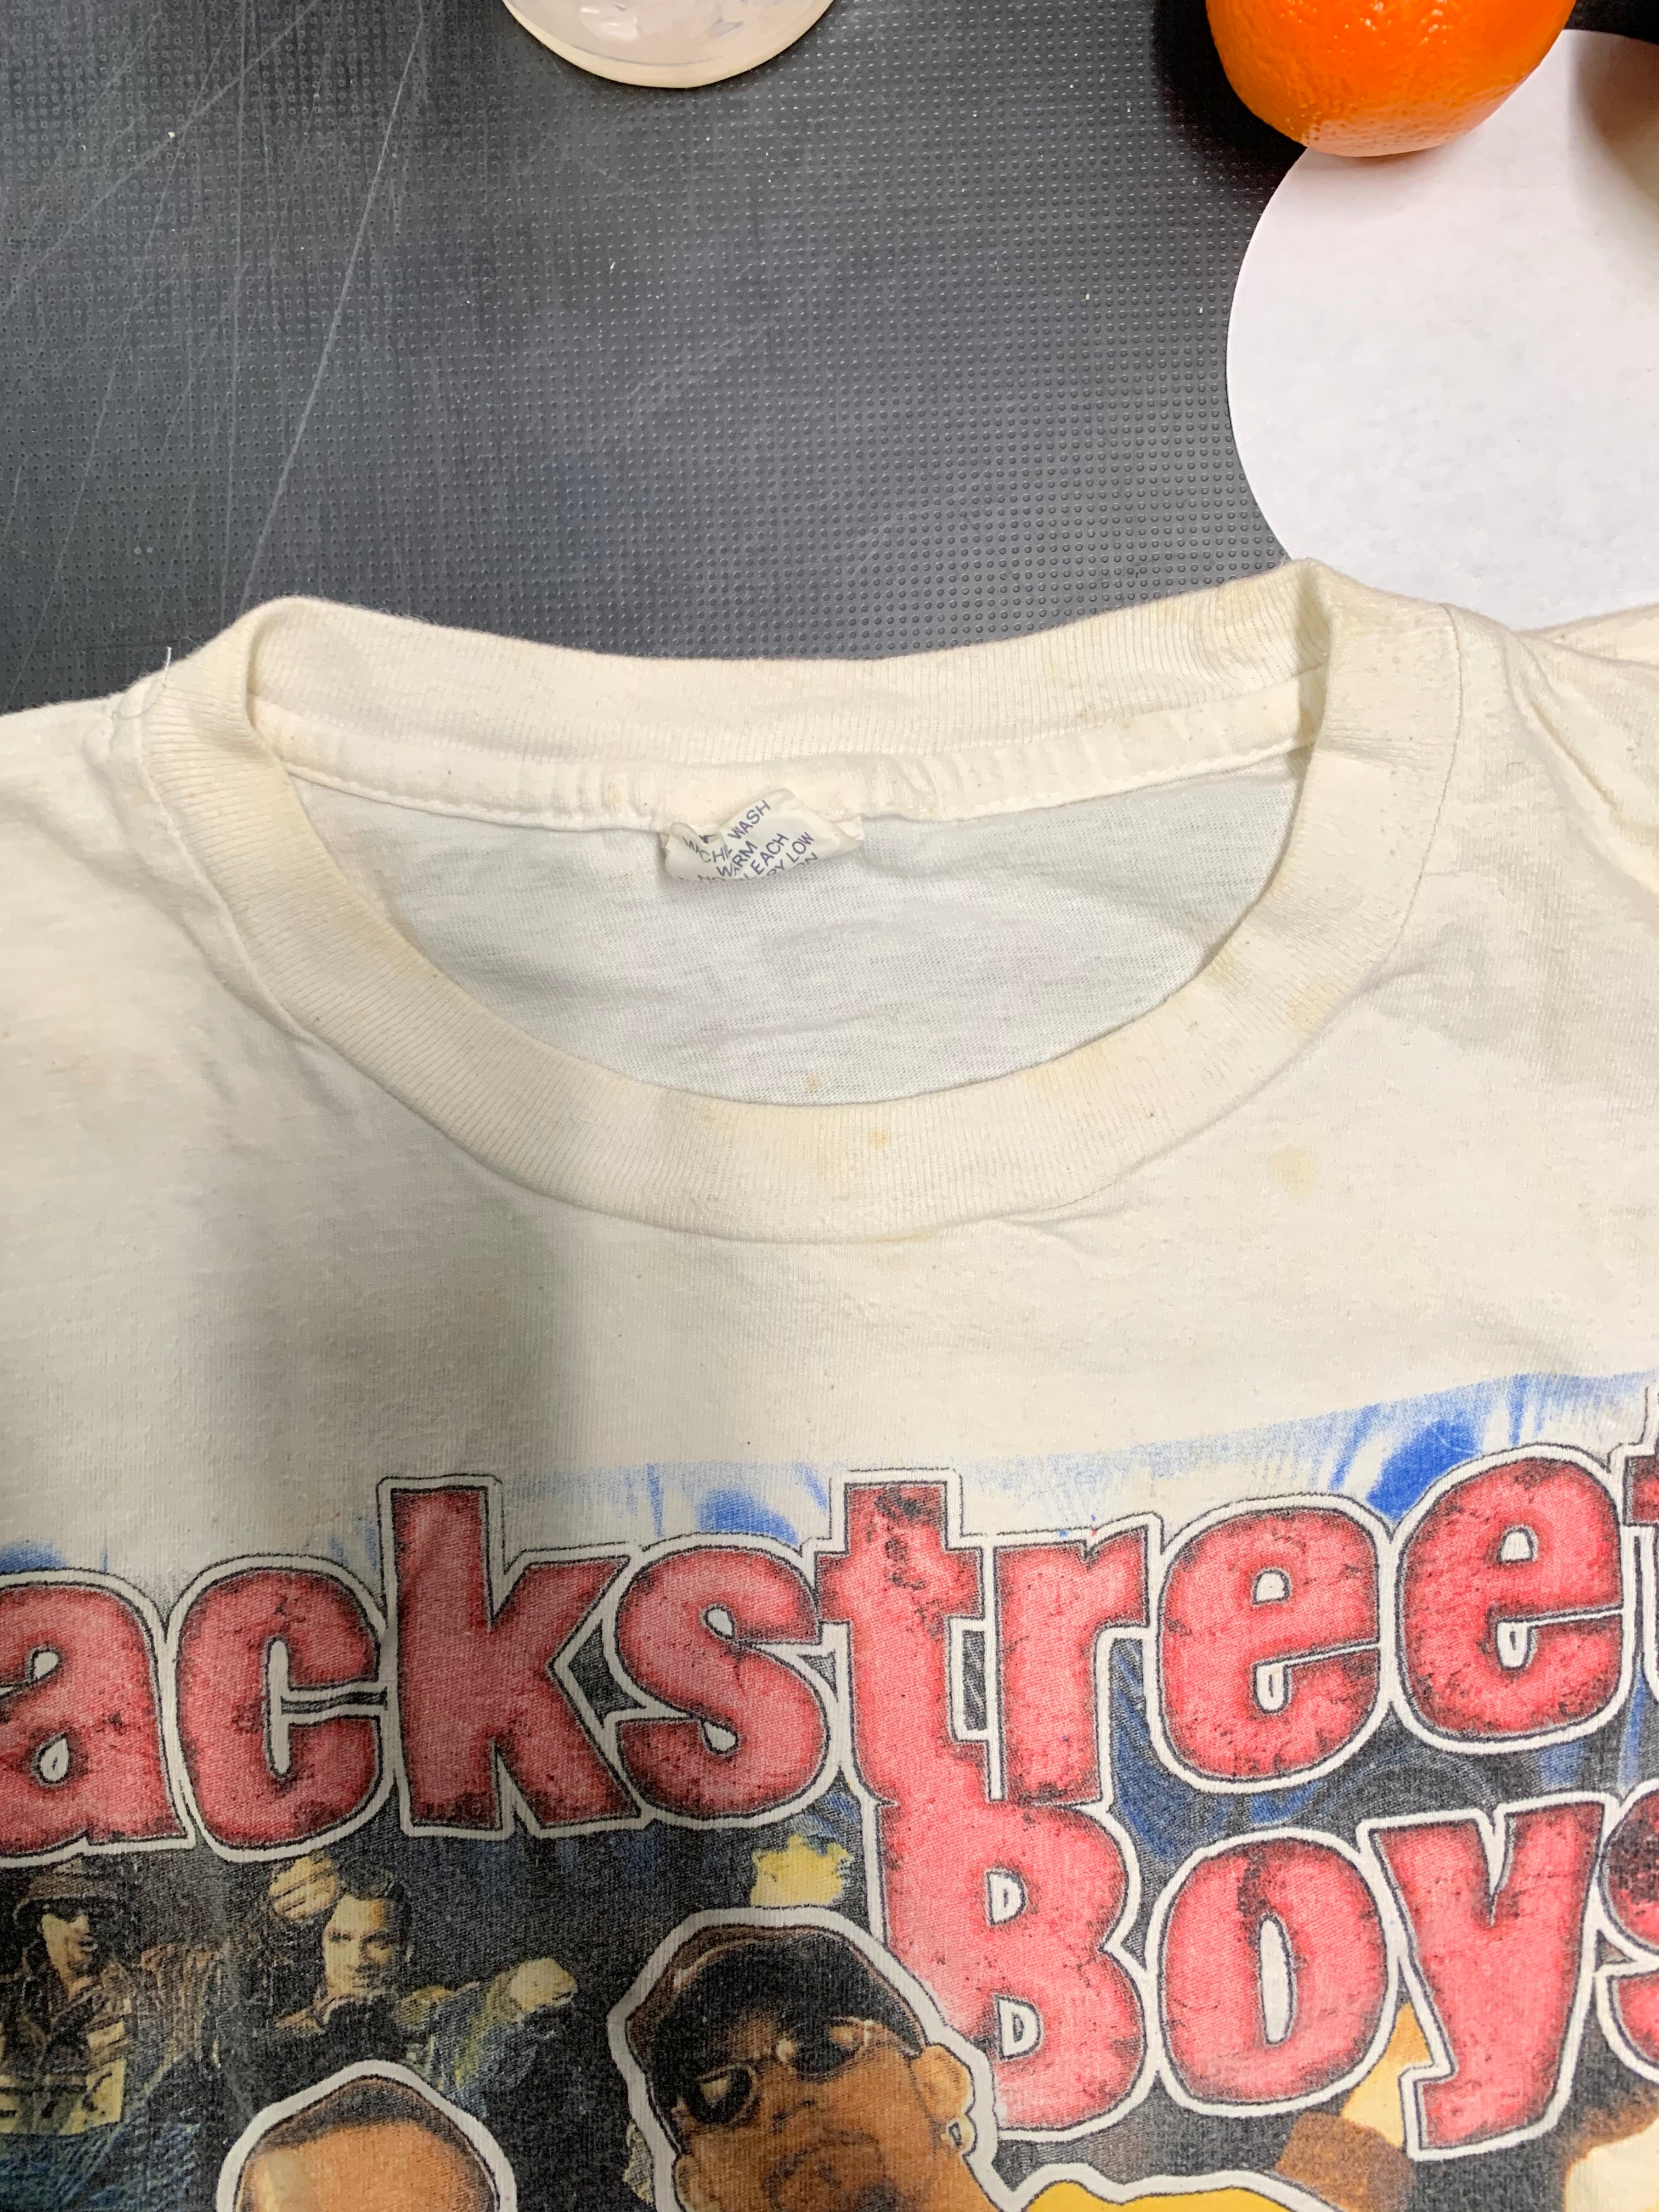 Backstreet Boys Group Shot T-Shirt, White (See Description), XL